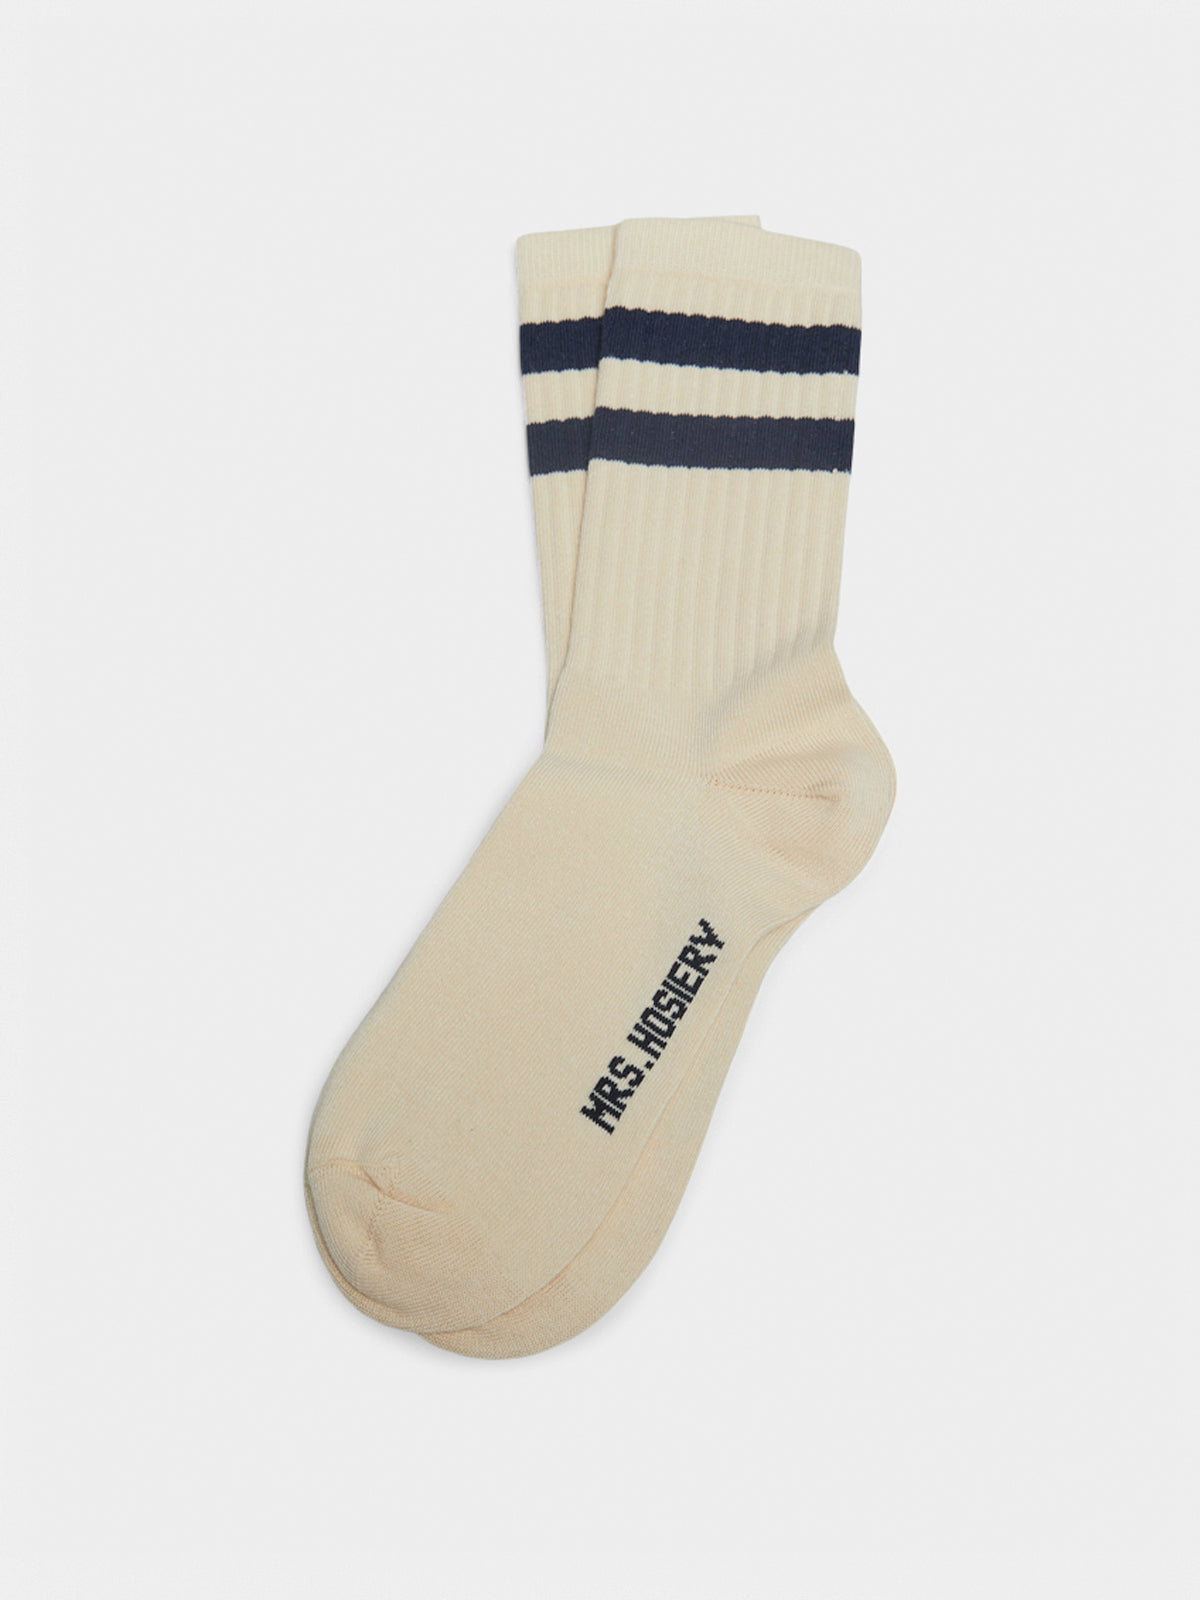 Mrs. Sporty Premium Socks in Off White and Navy Stripes